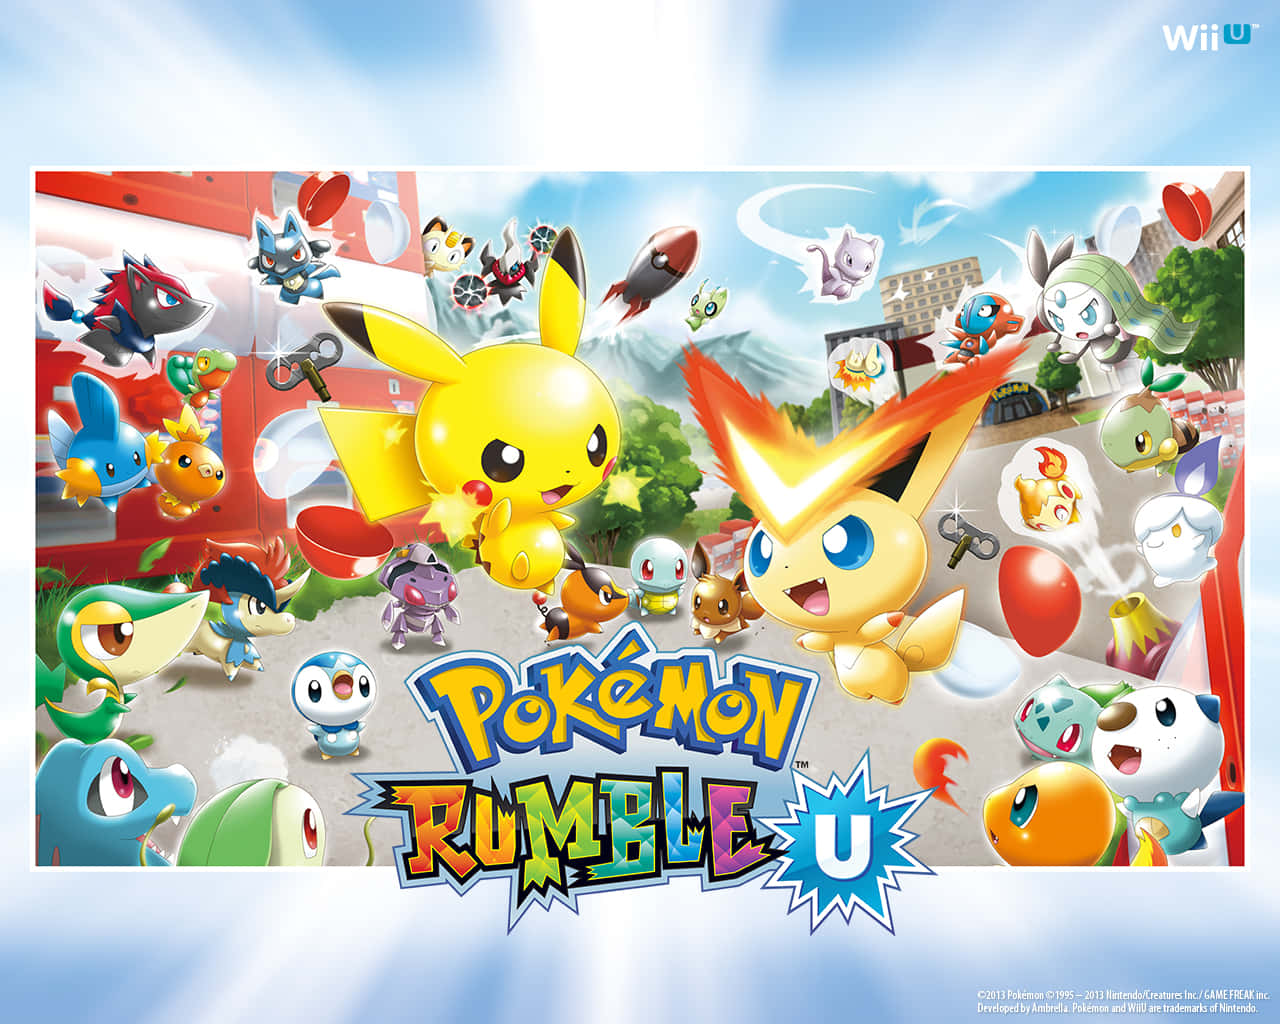 Enter the wild world of Pokemon Rumble! Wallpaper